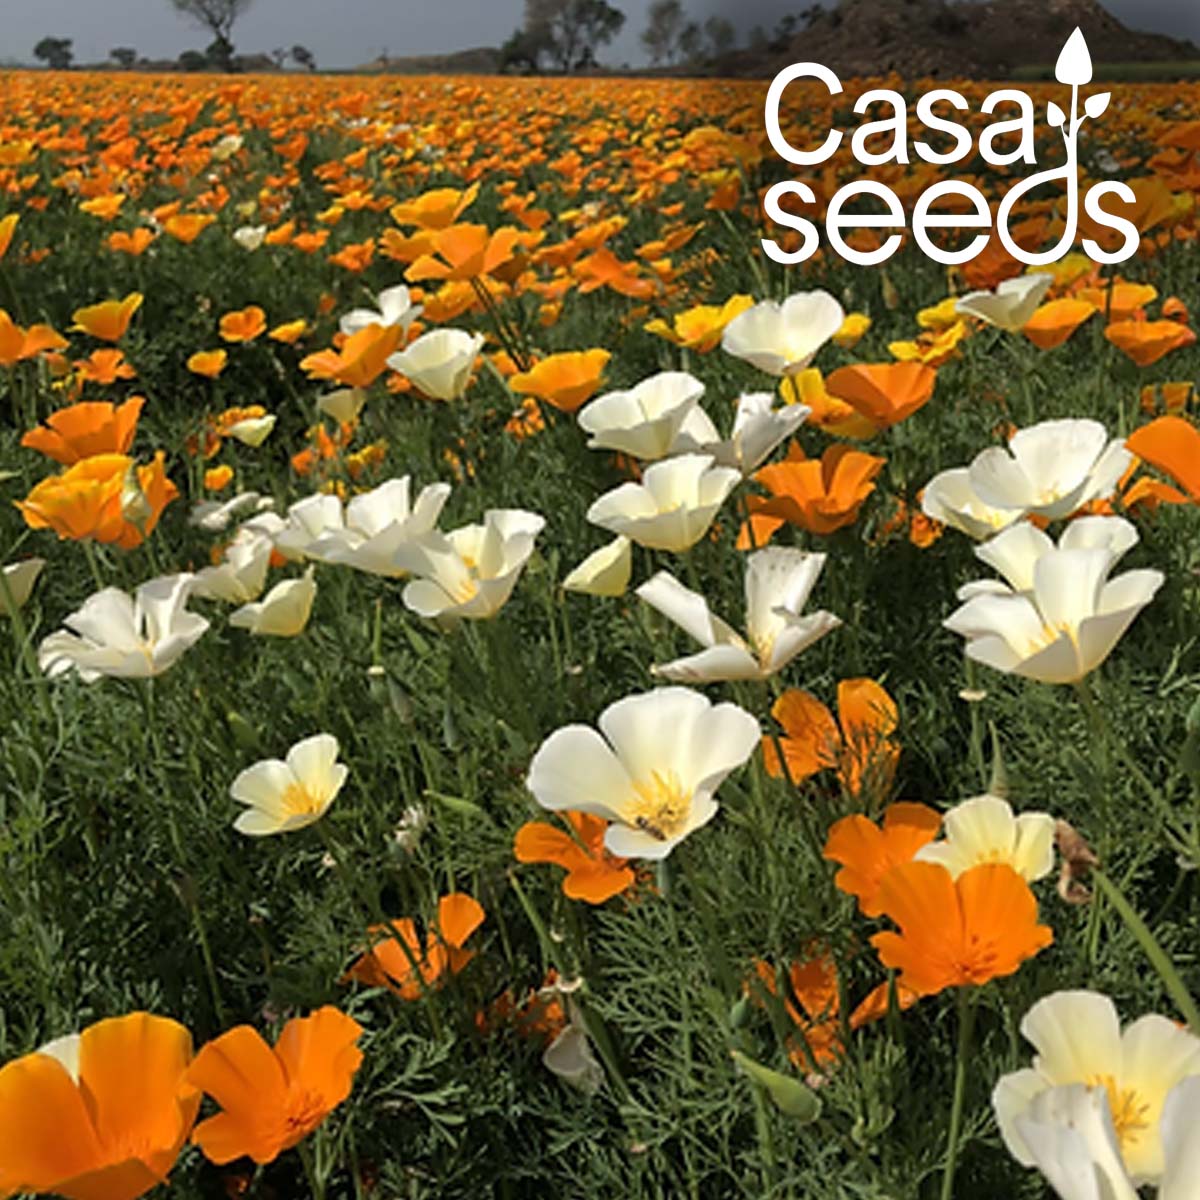 California Poppy - Eschscholzia Californica Mix - 300 Seeds